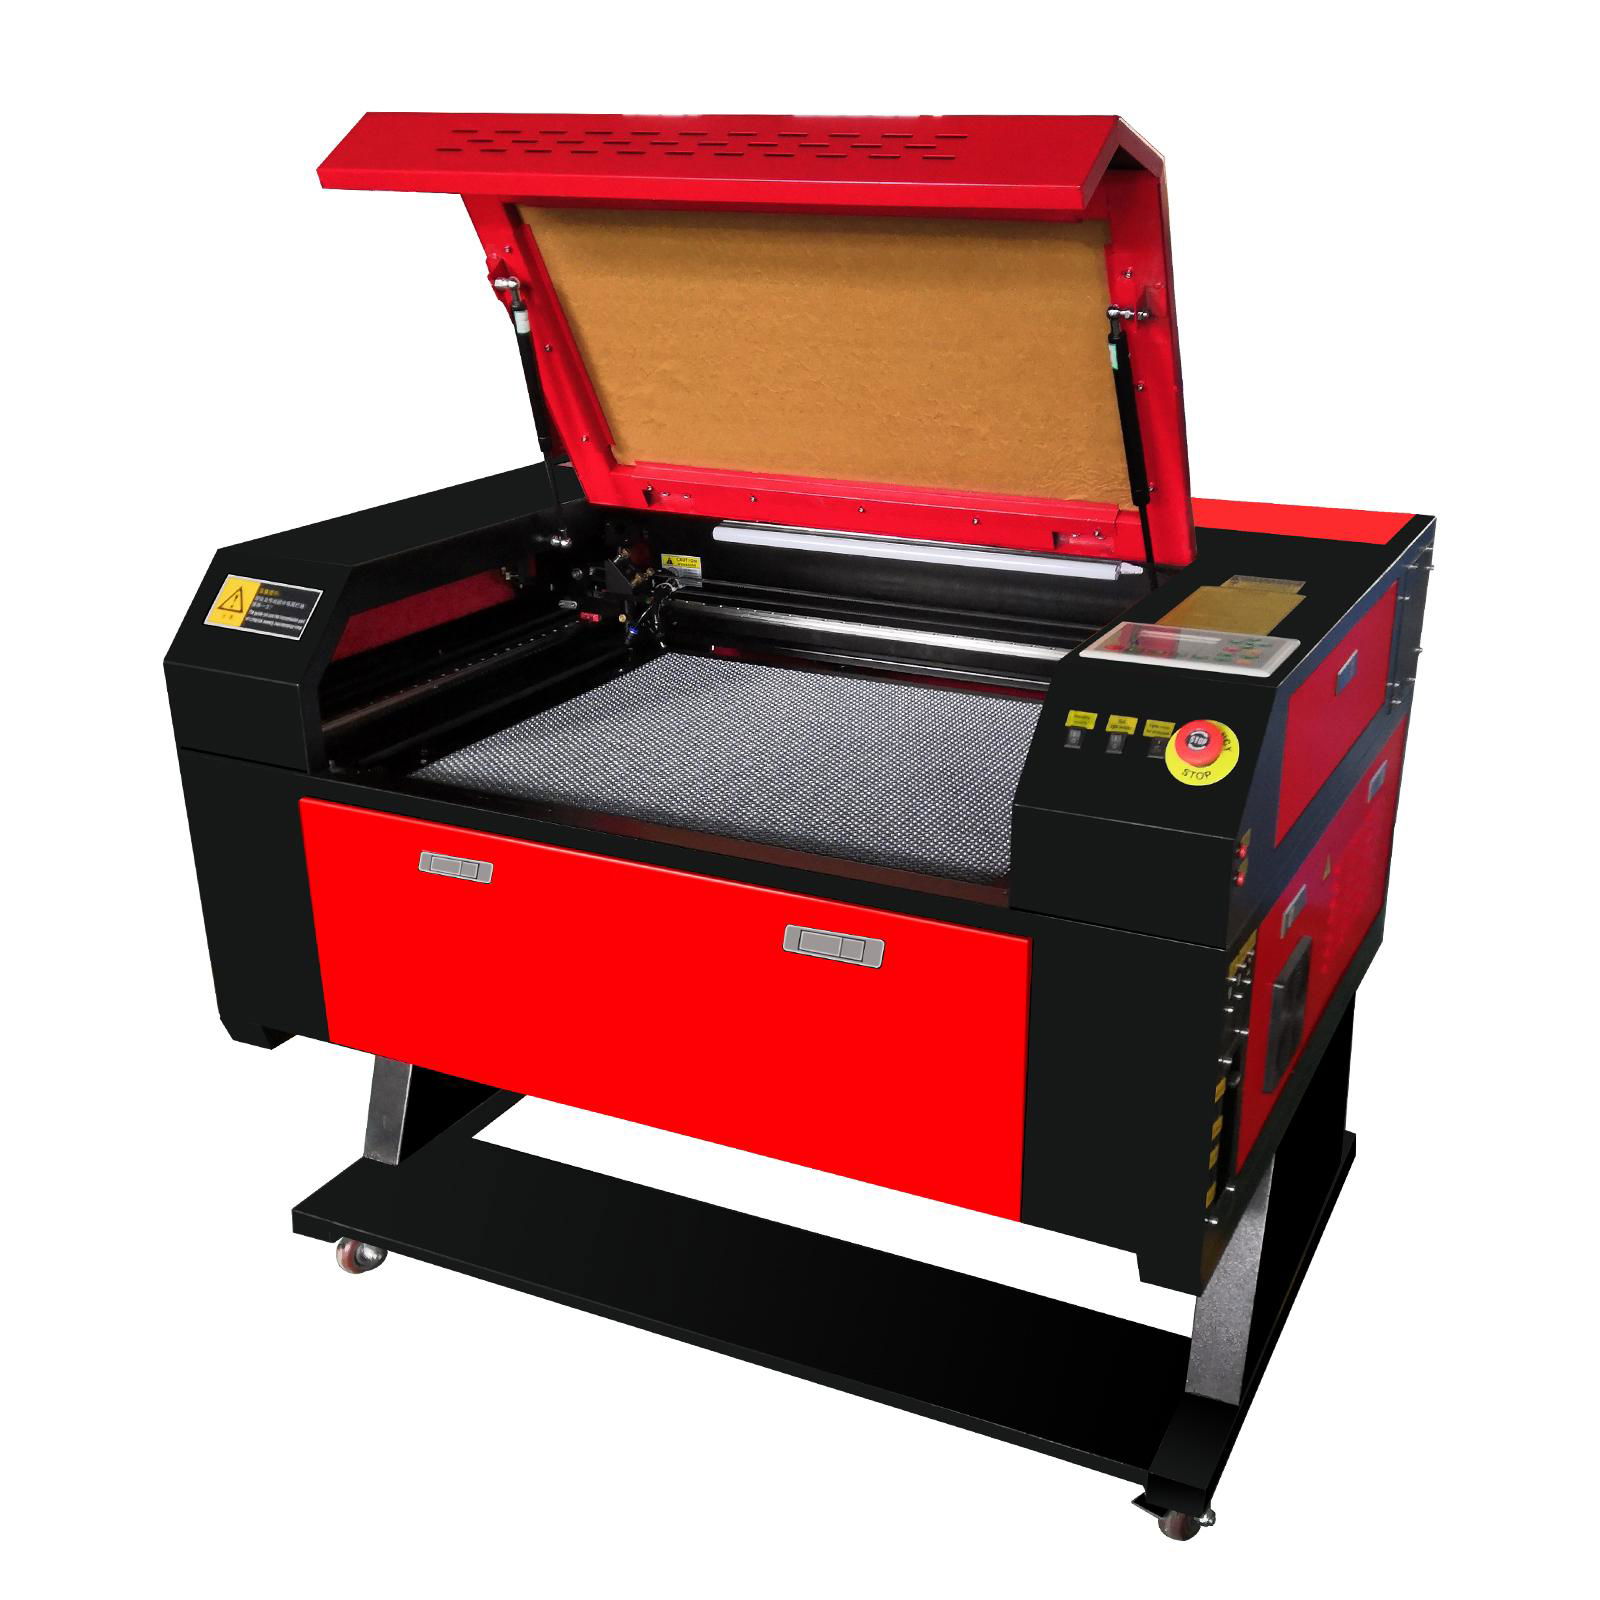 7050 Laser Engraving Machine Crafts Engraving and Cutting 2